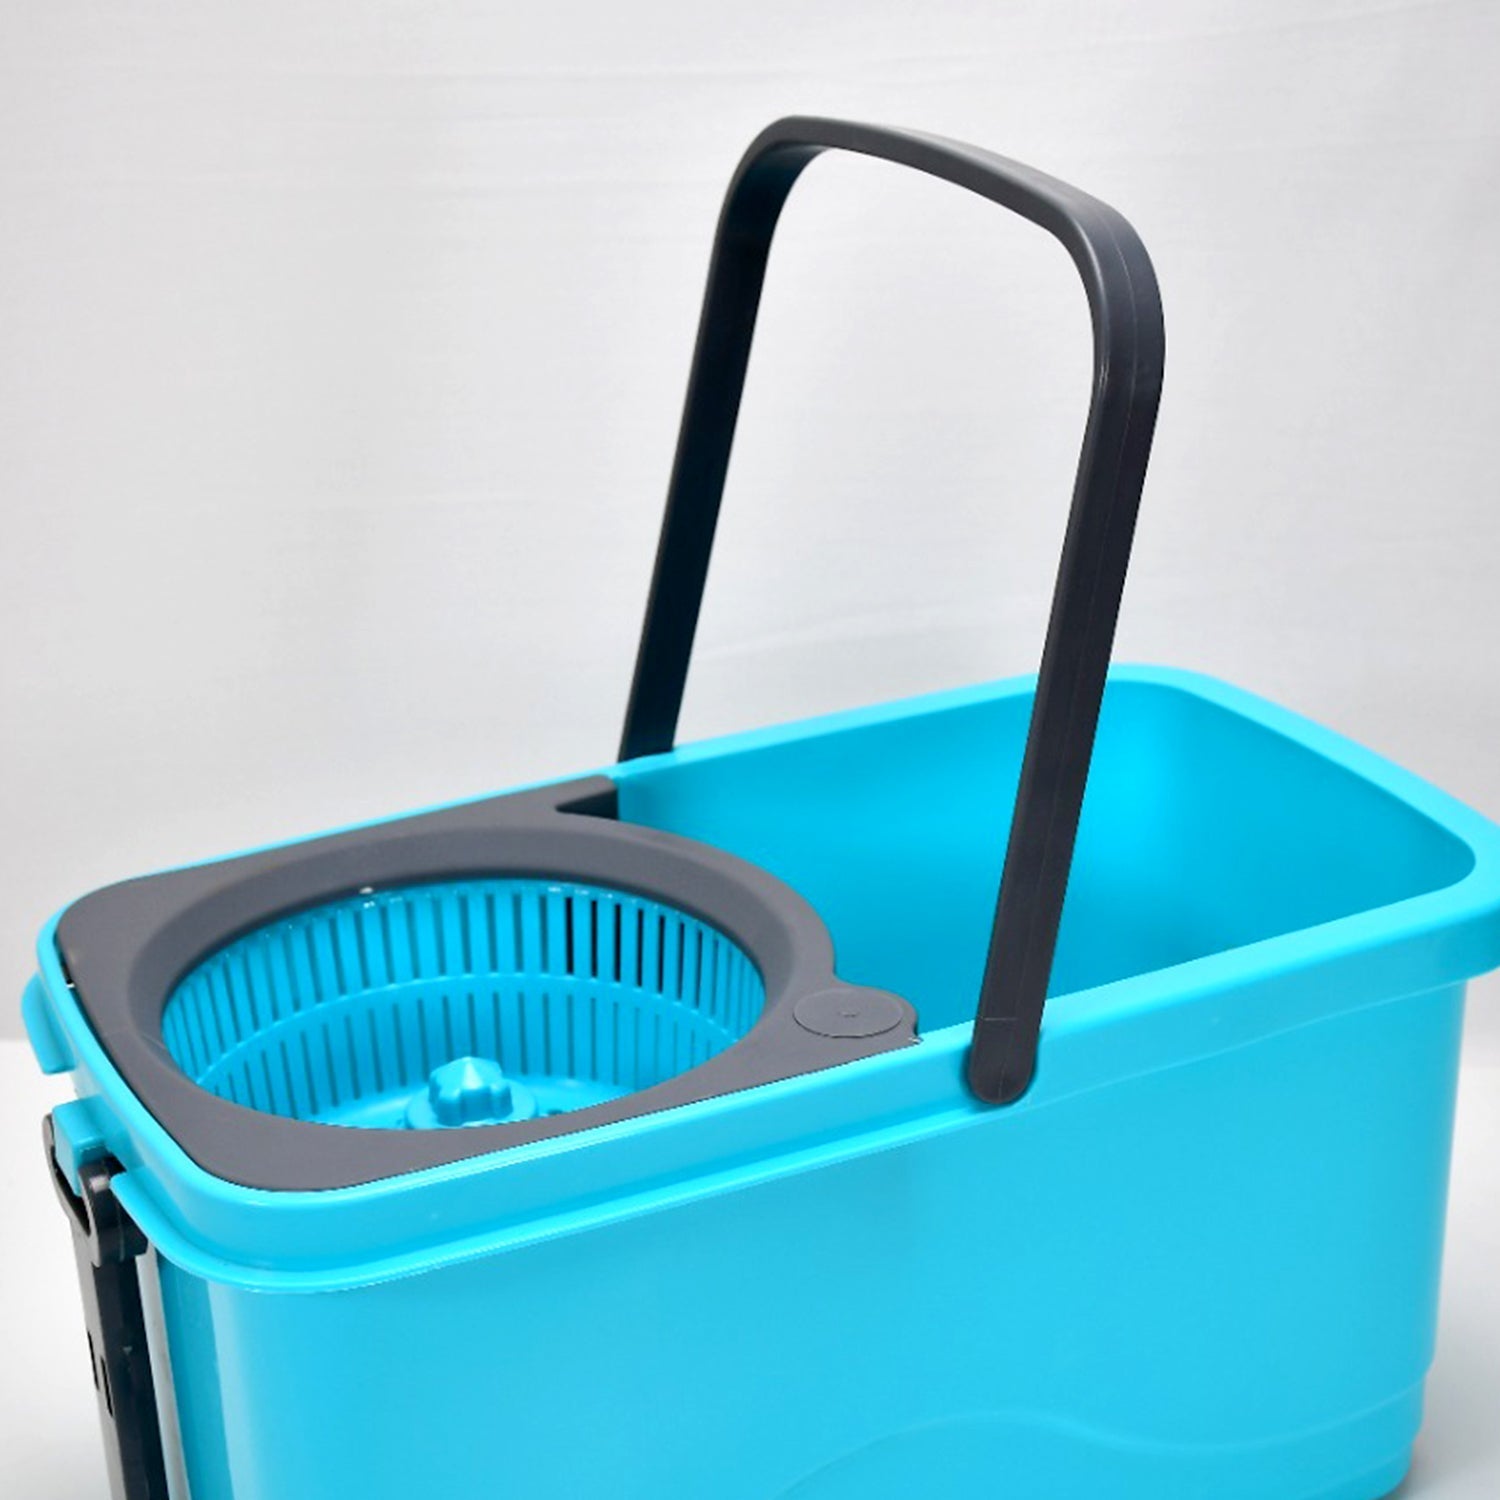 4028 Quick Spin Mop Plastic spin, Bucket Floor Cleaning, Easy Wheels & Big Bucket, Floor Cleaning Mop with Bucket 